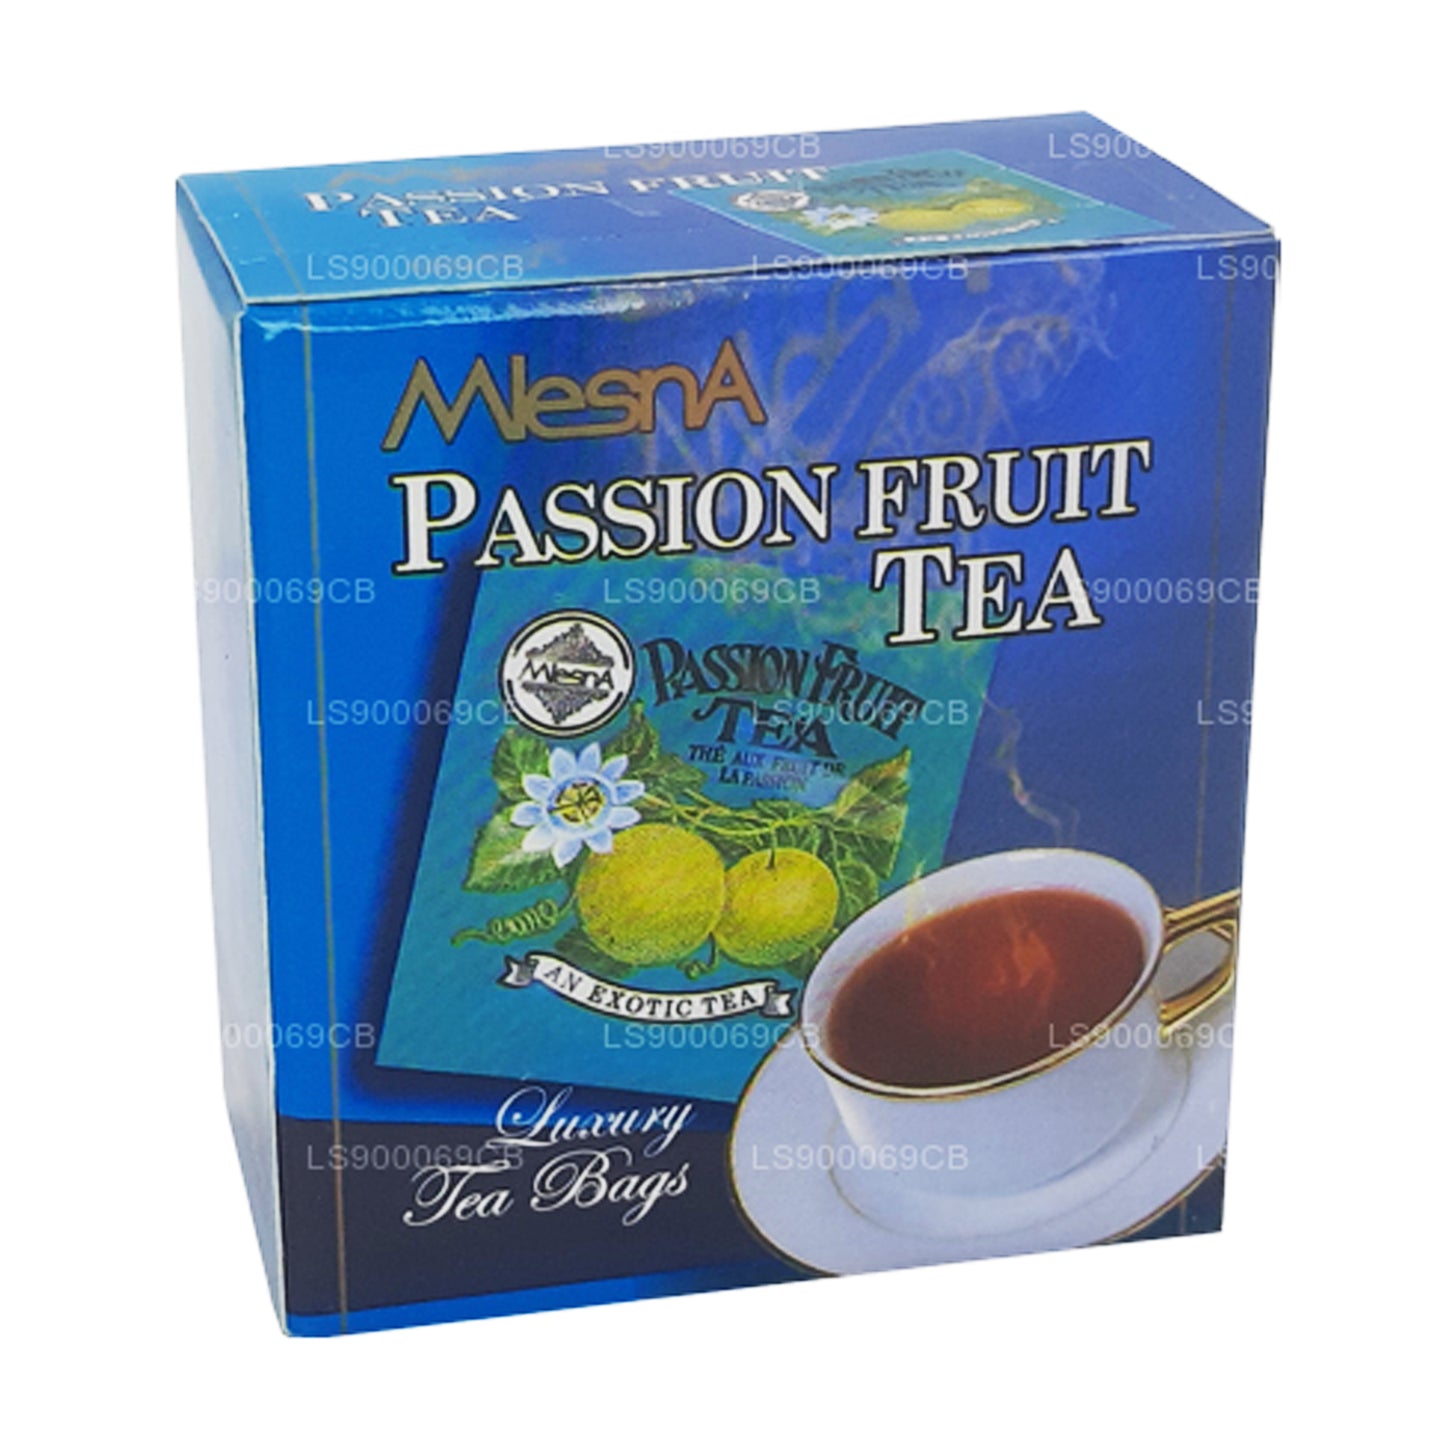 Mlesna Passion Fruit Tea (20g) 10 Luxury Tea Bags